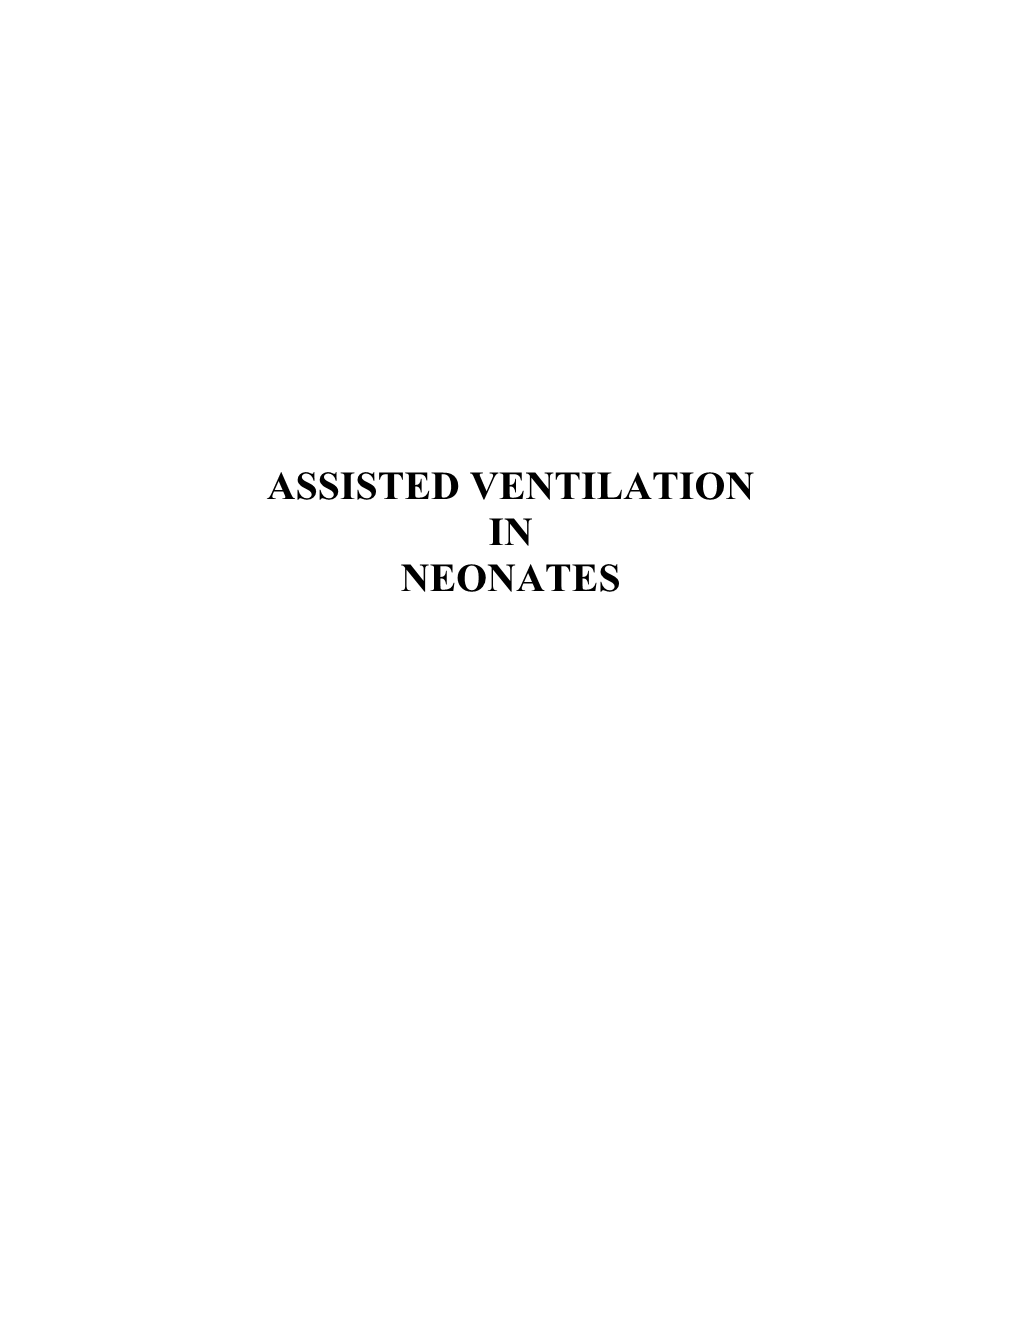 Intermittent Mandatory Ventilation (Imv)